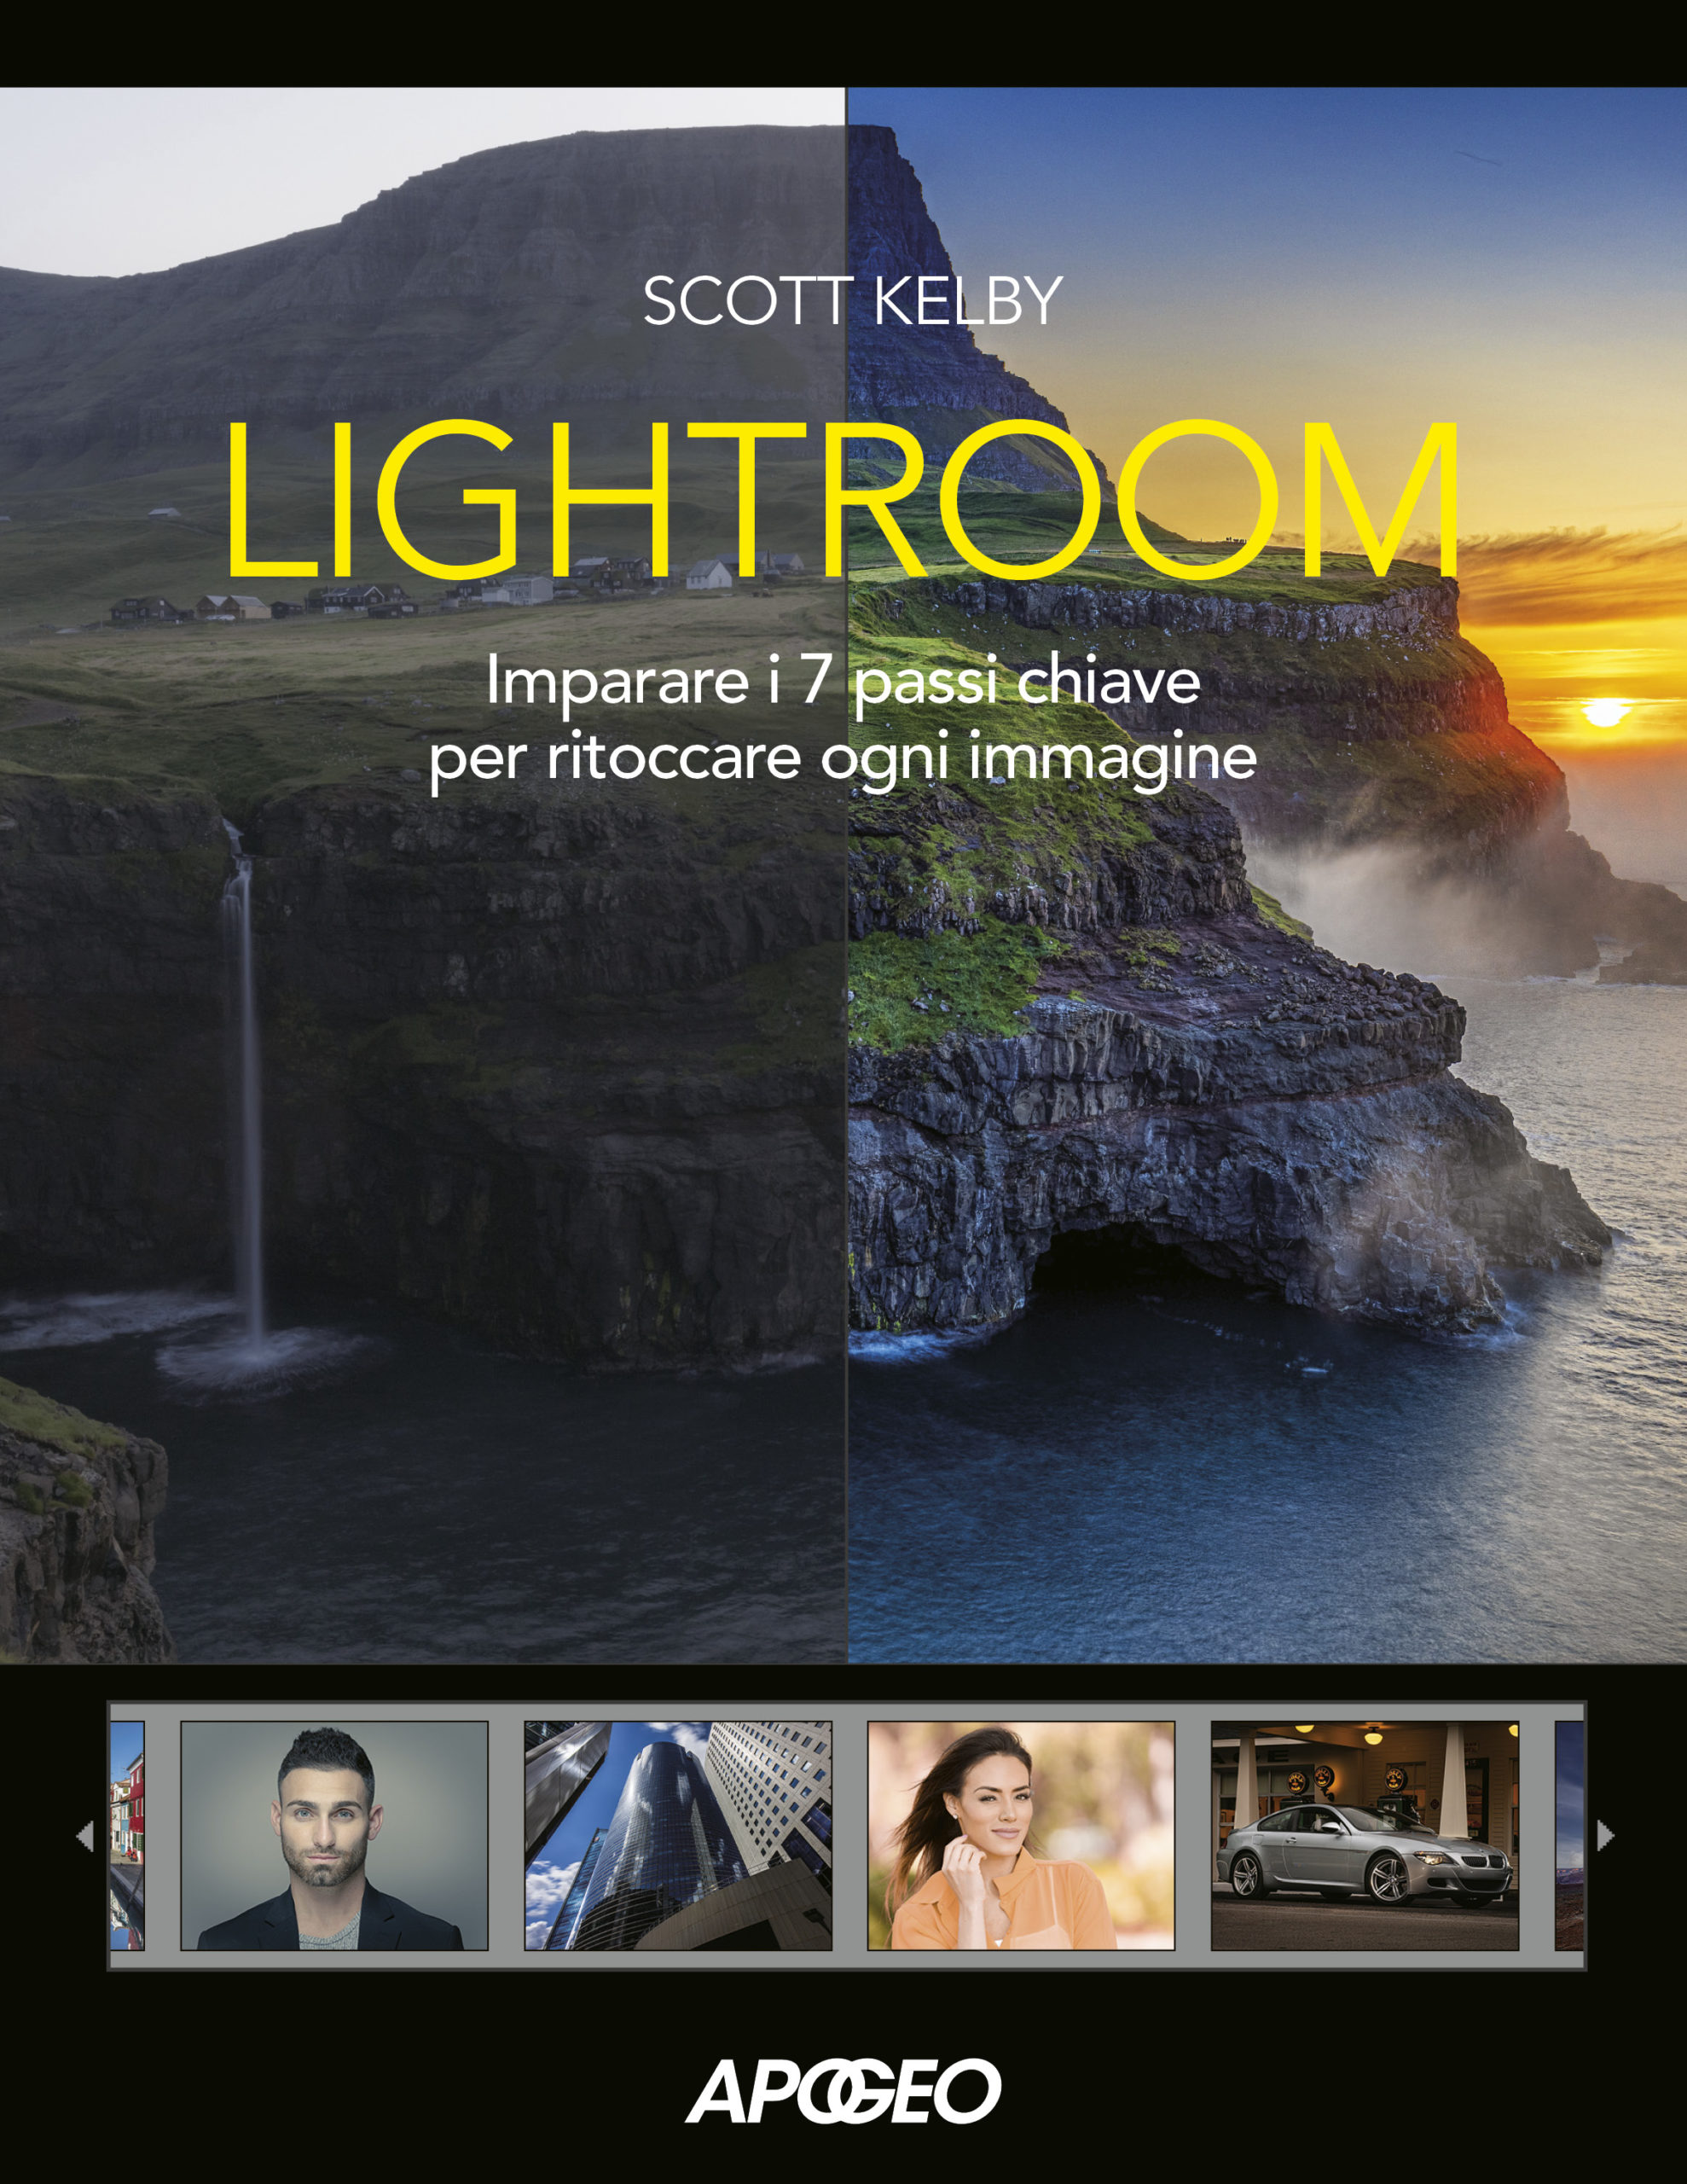 Lightroom, di Scott Kelby